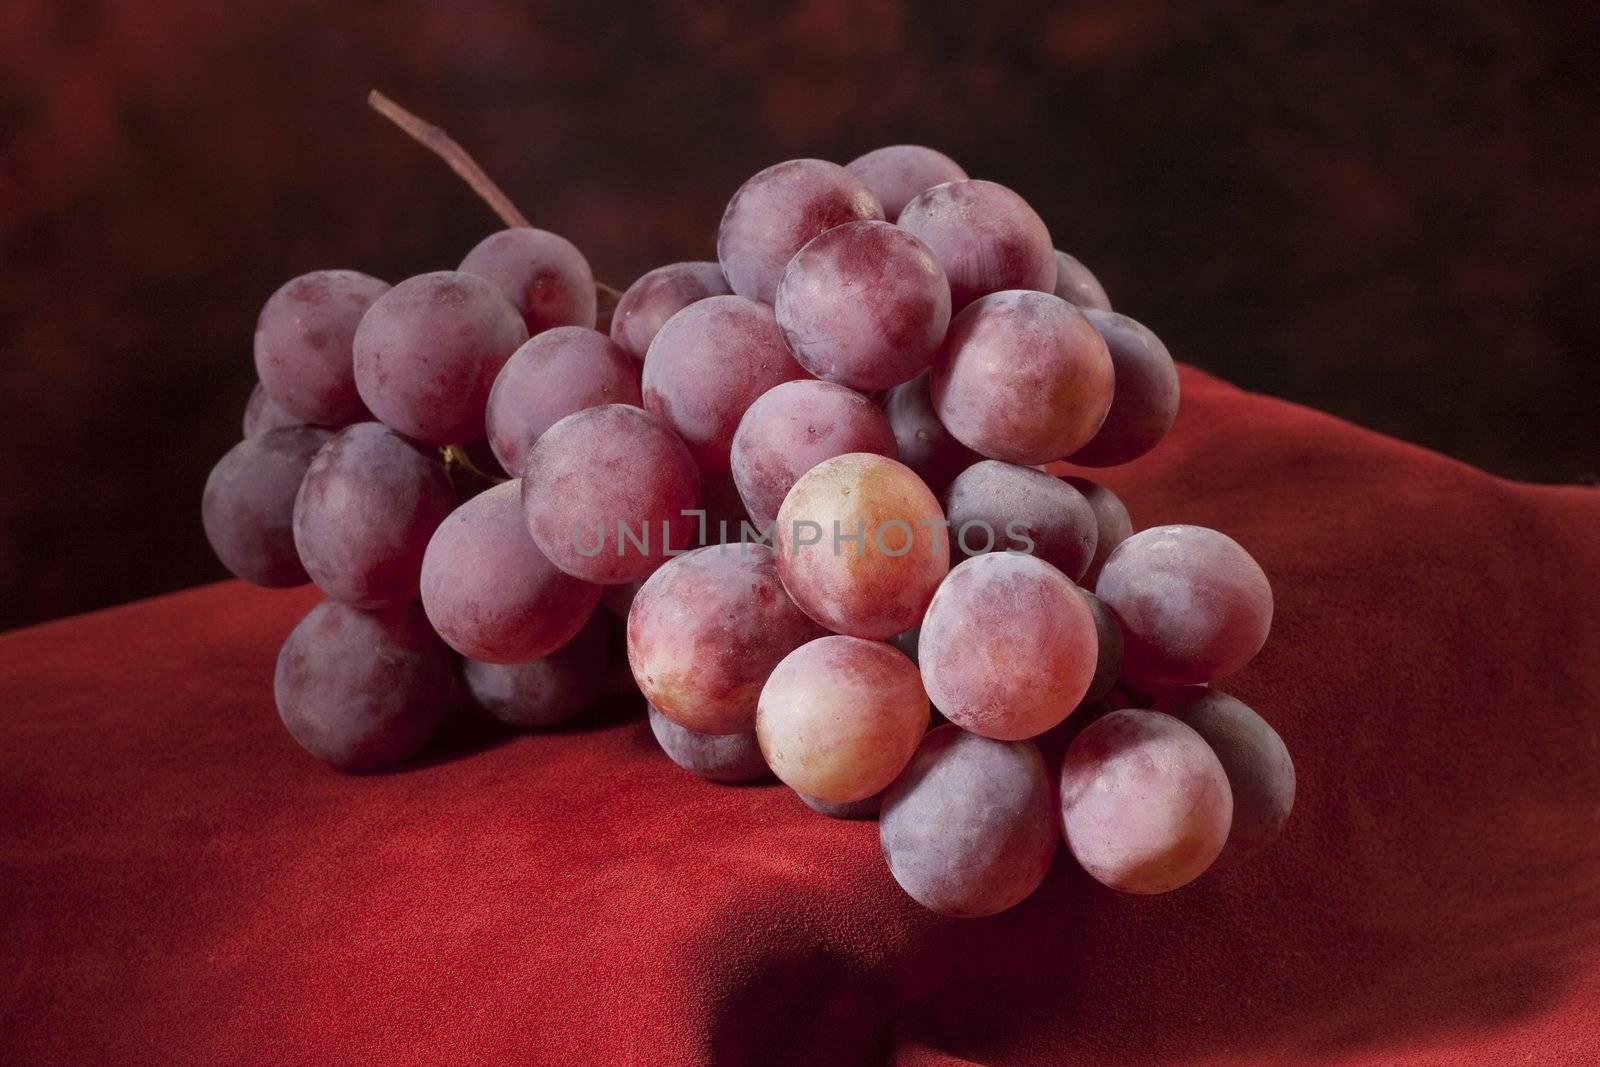 Branch of red grapes by igor_stramyk